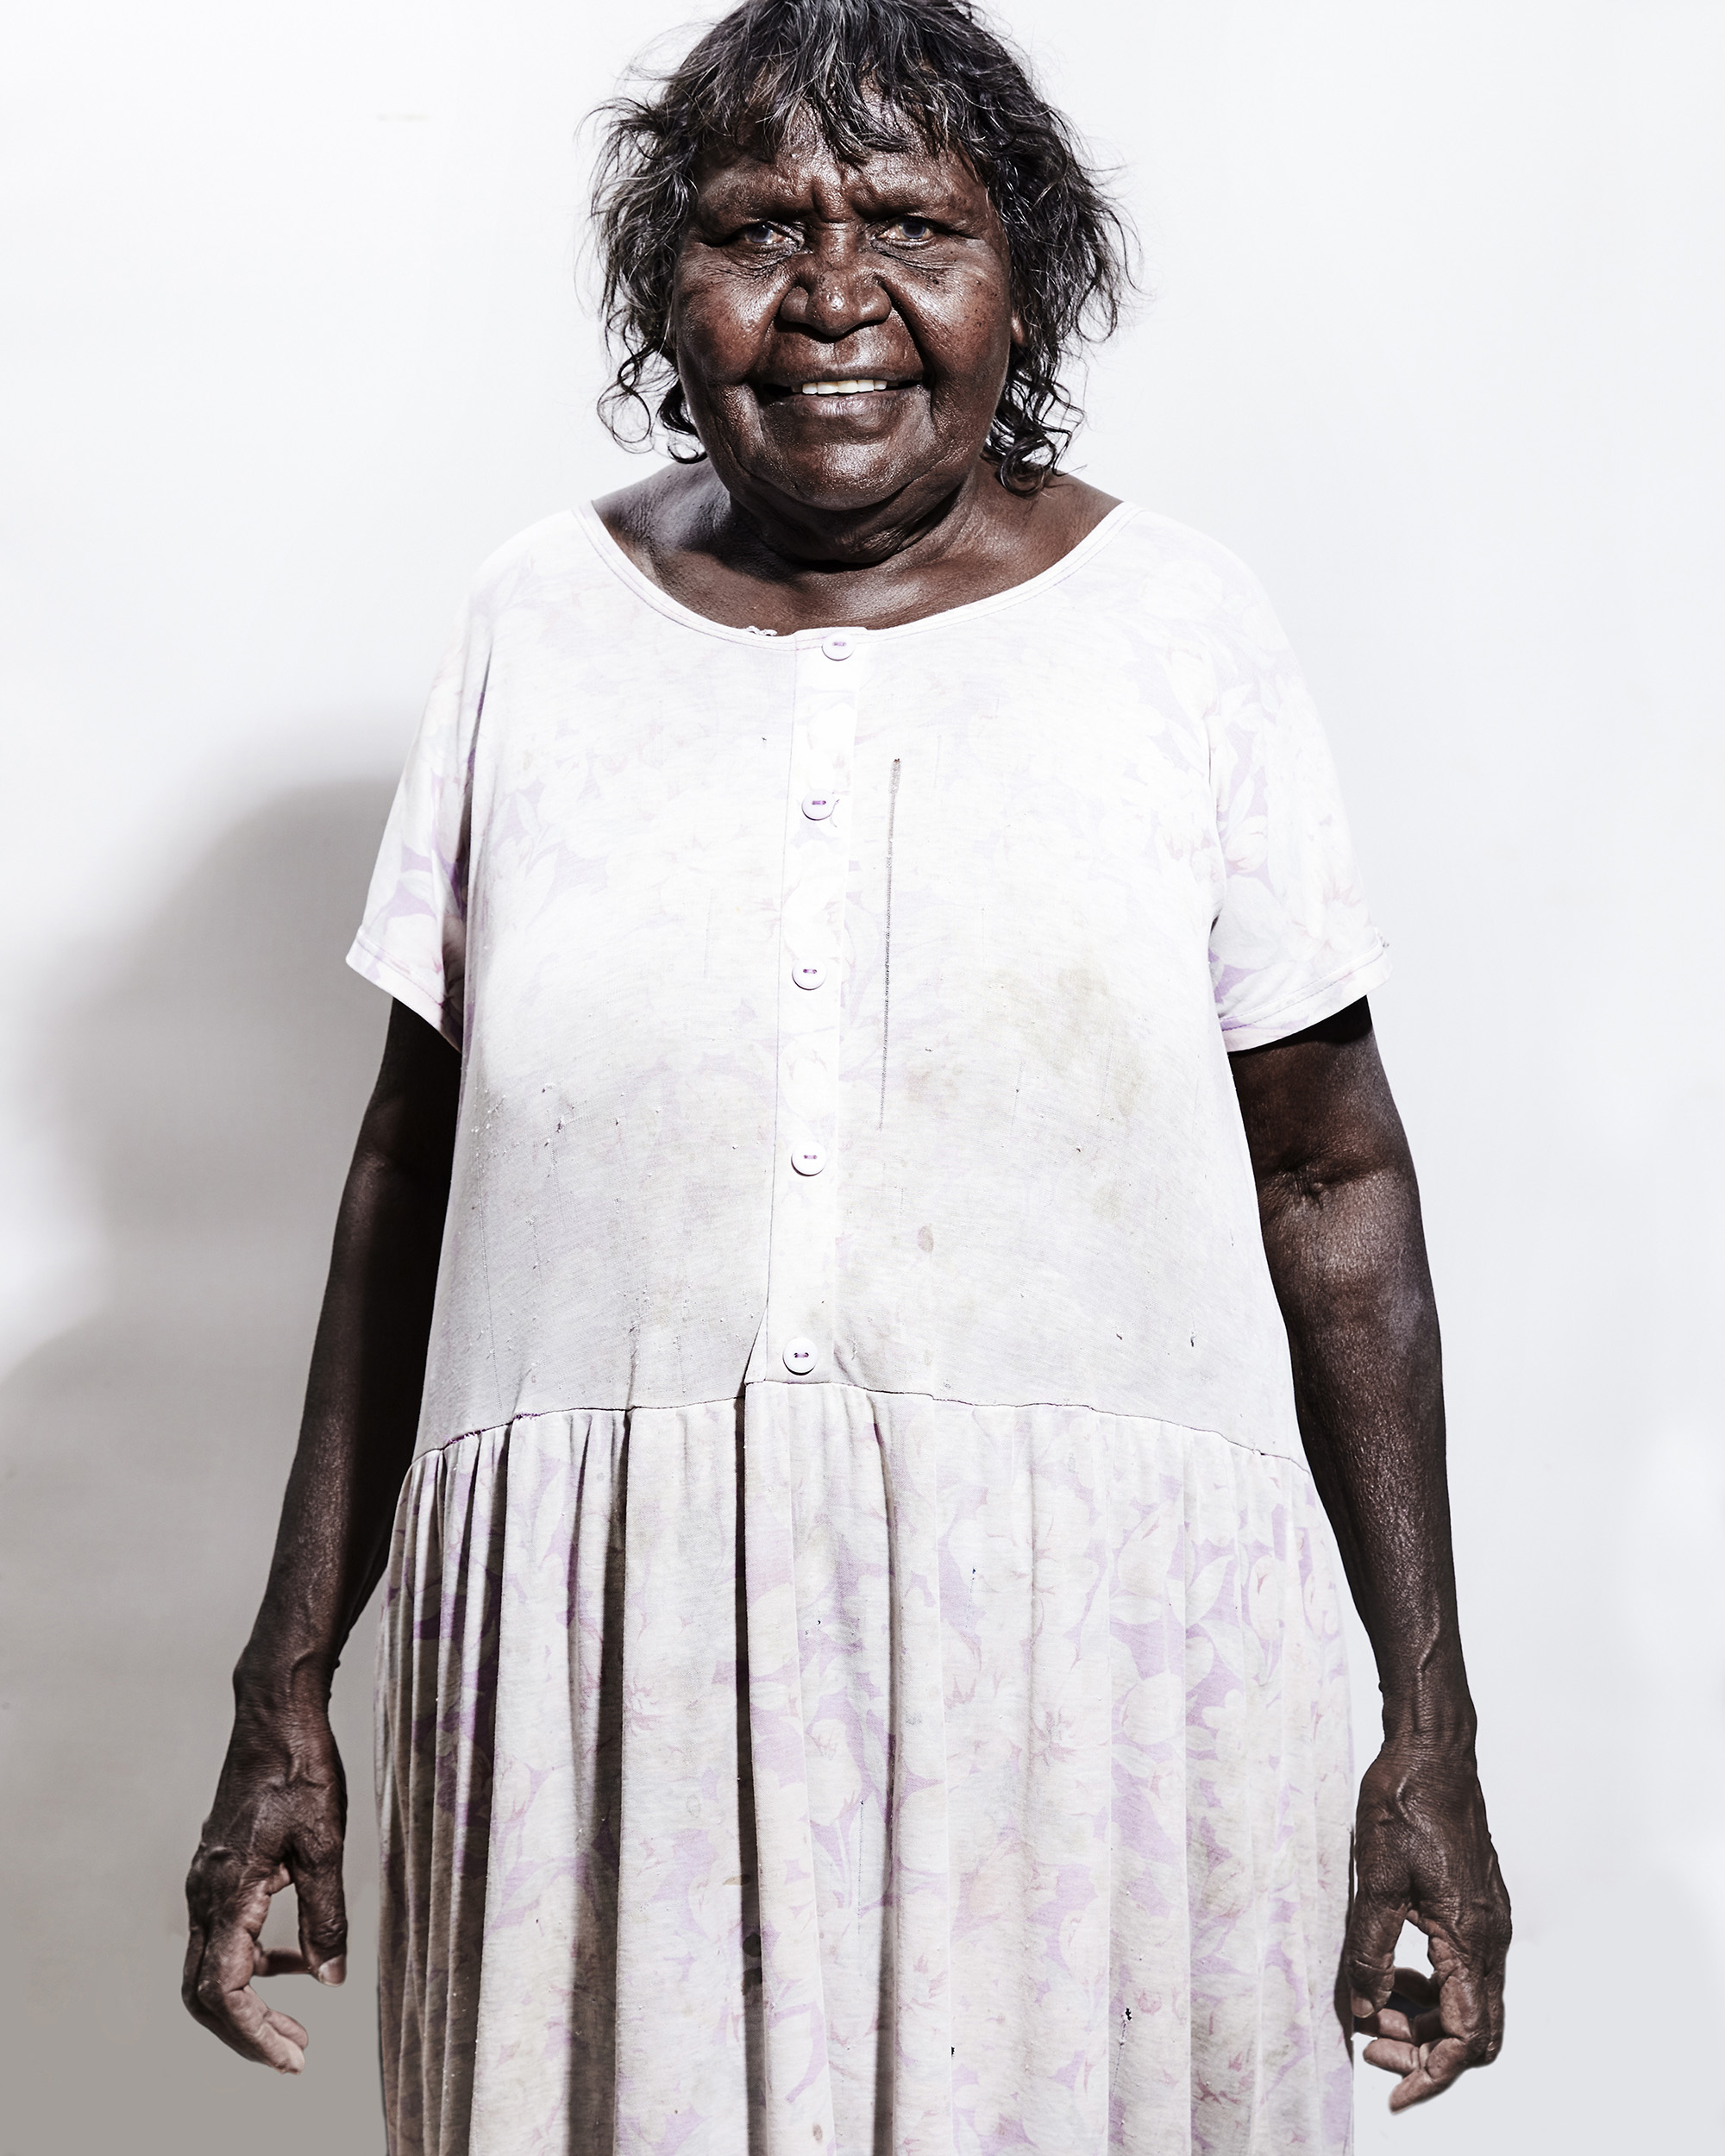 indigenous-artists-thom-rigney-professional-photographer-documentary-portrait-002